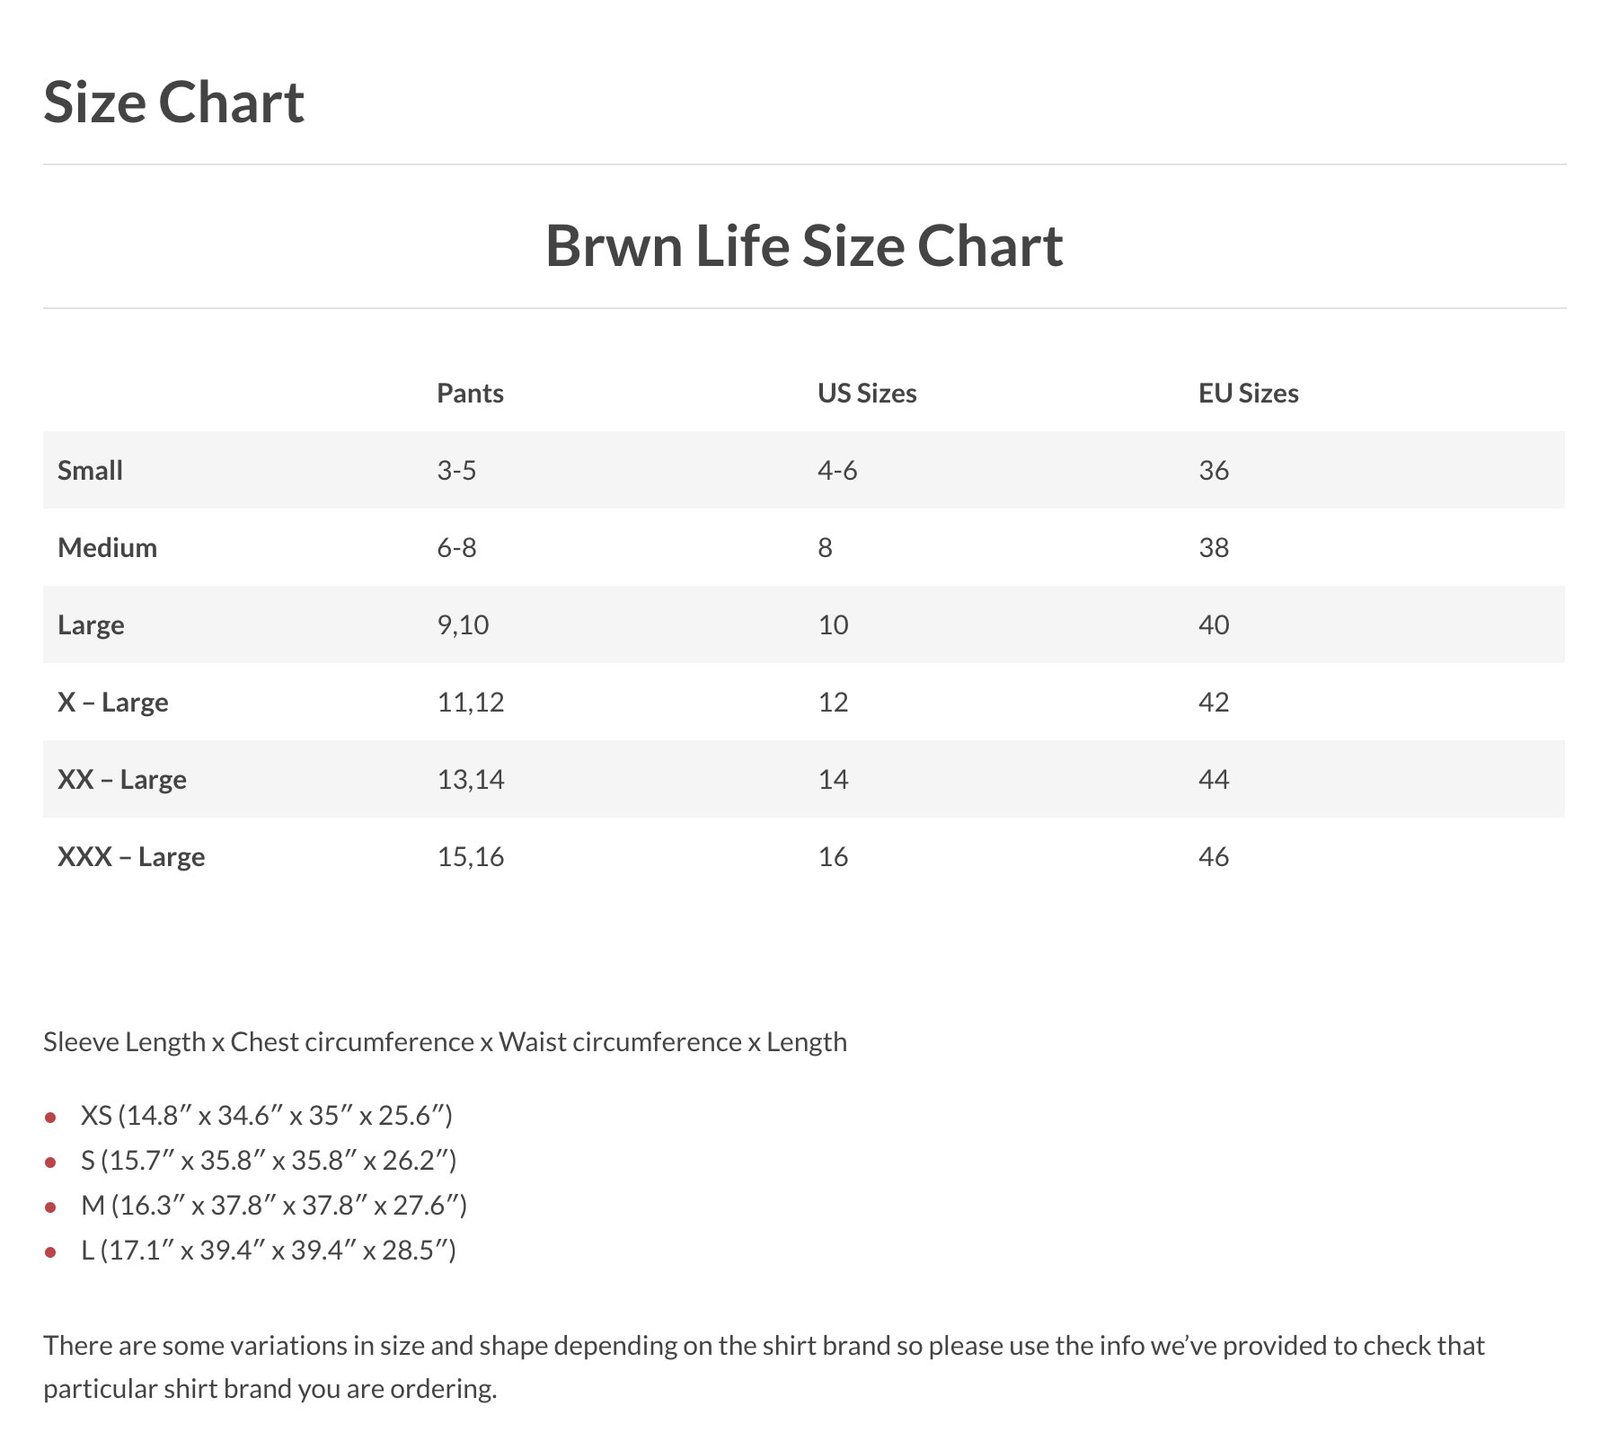 Pecan Size Chart